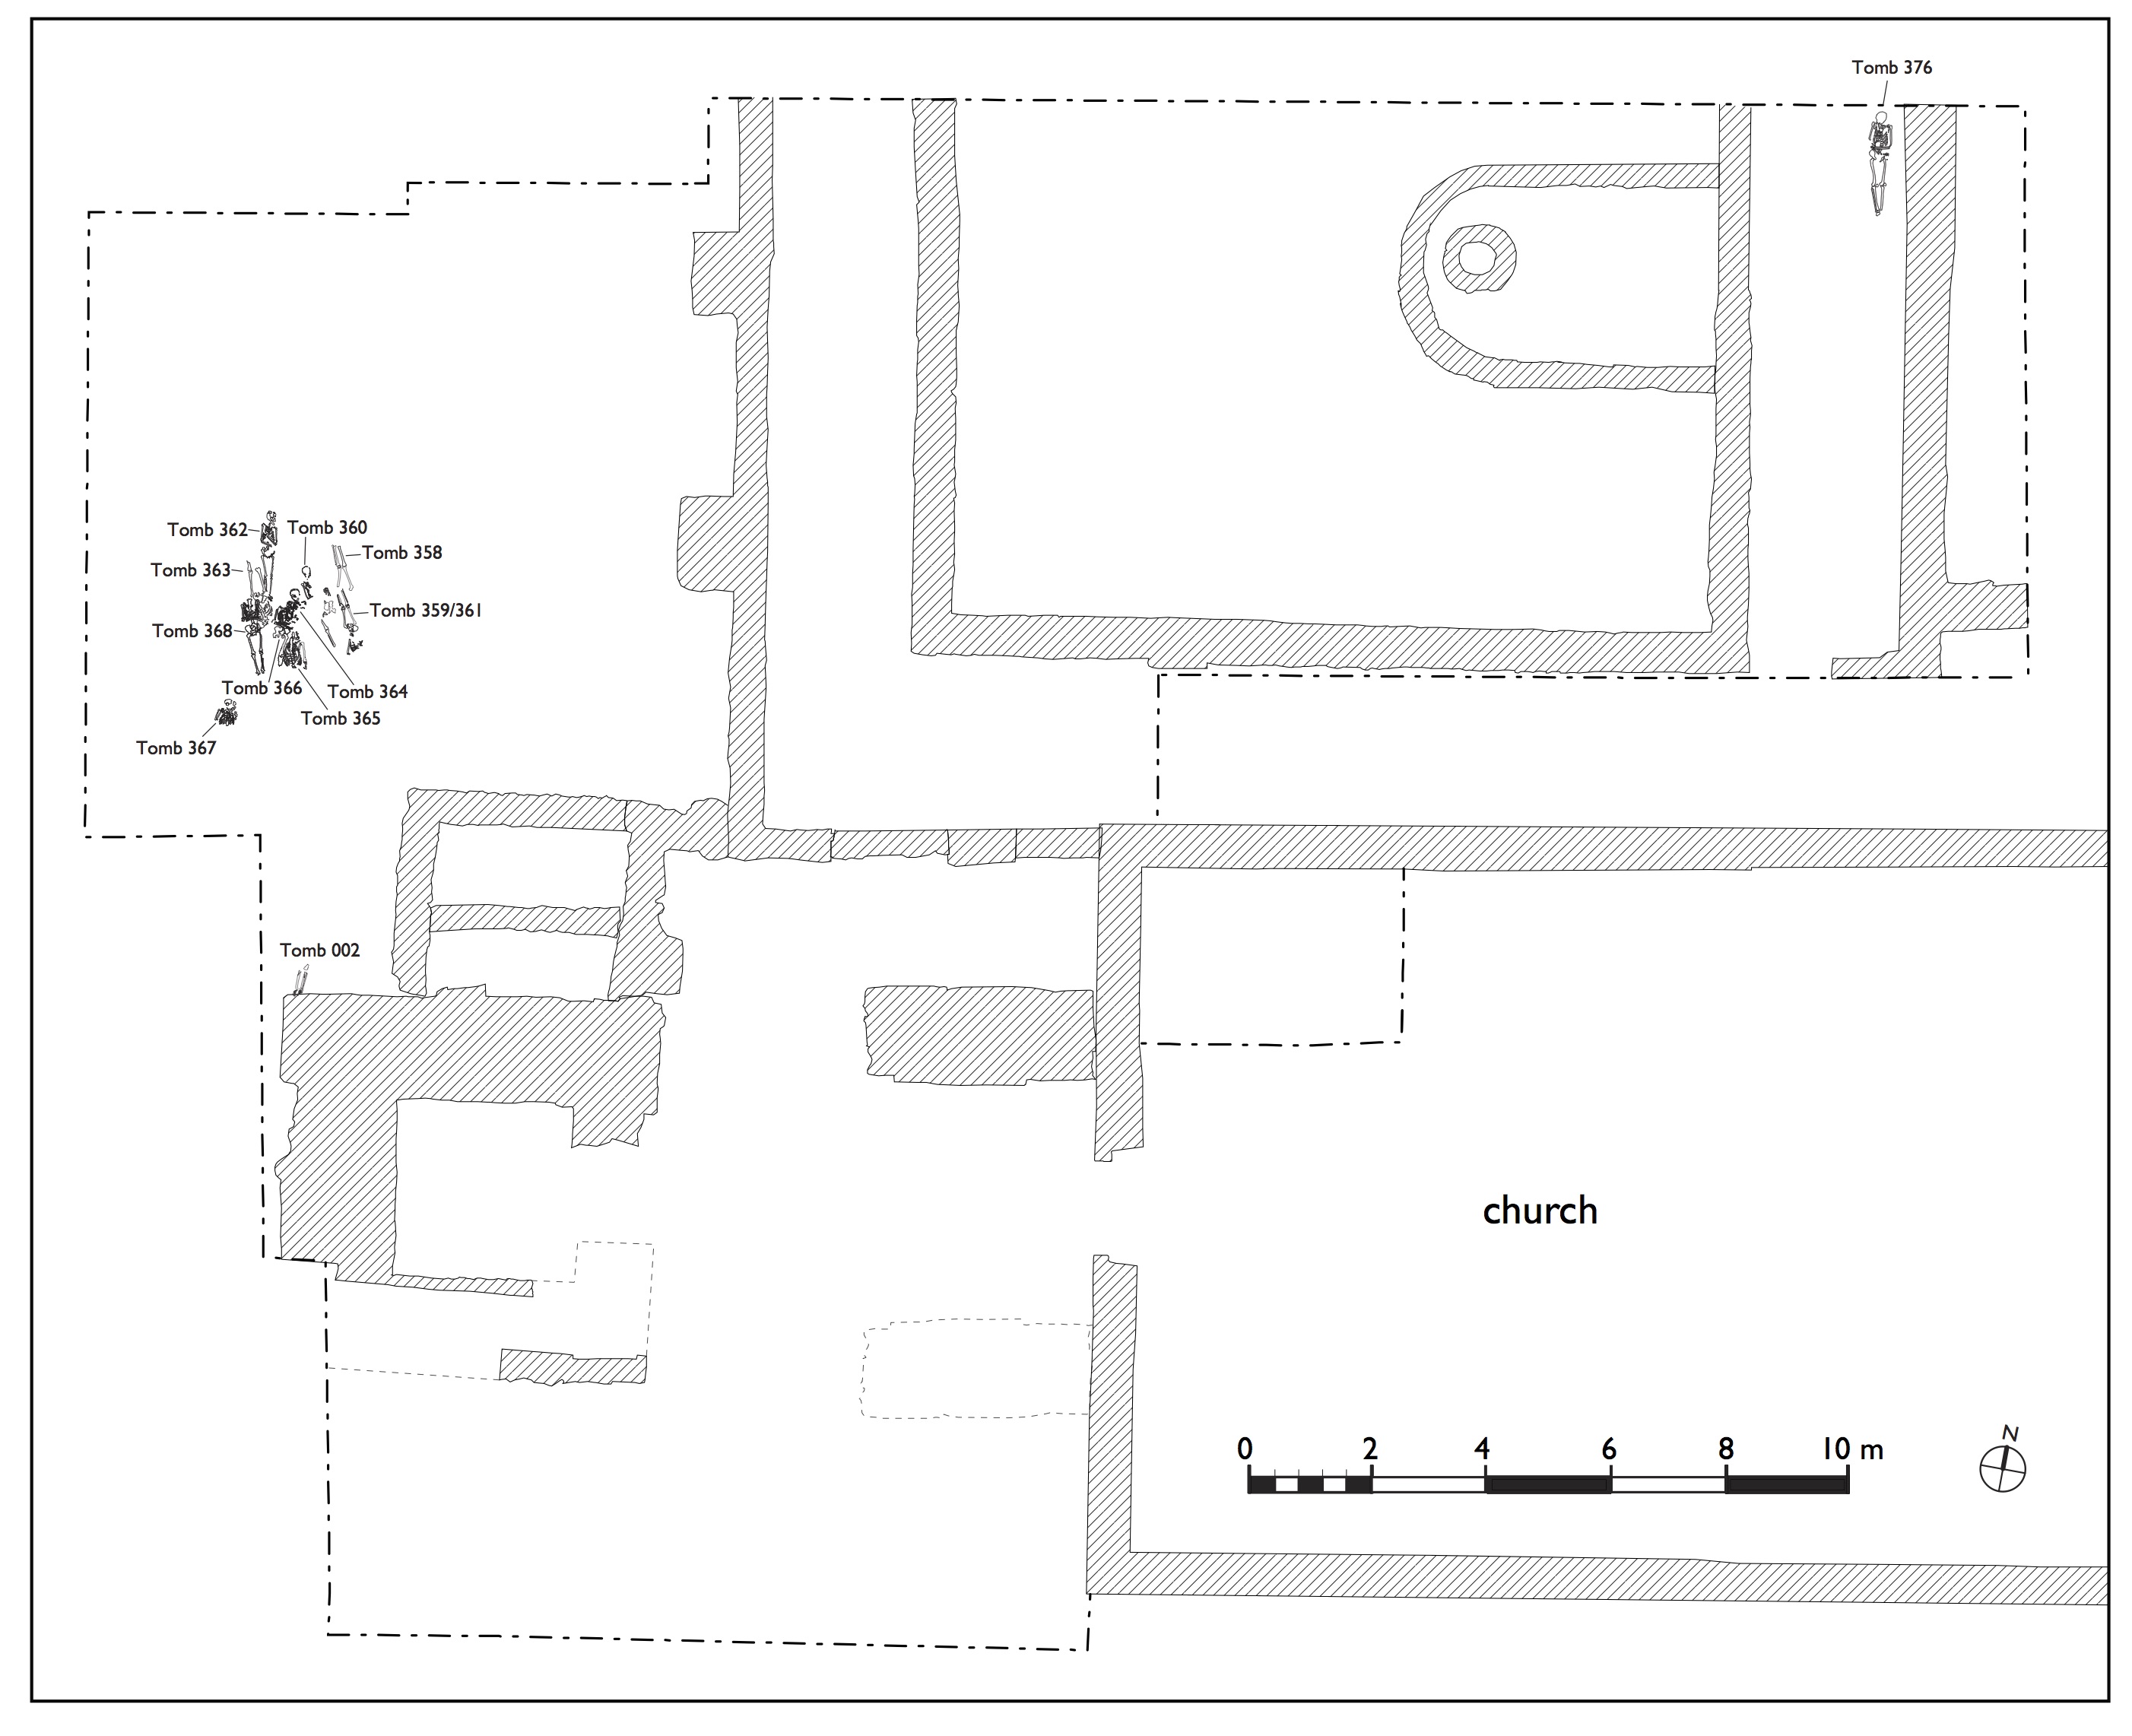 Figure 35. Phase plan showing Central Medieval C (Margaret Andrews).